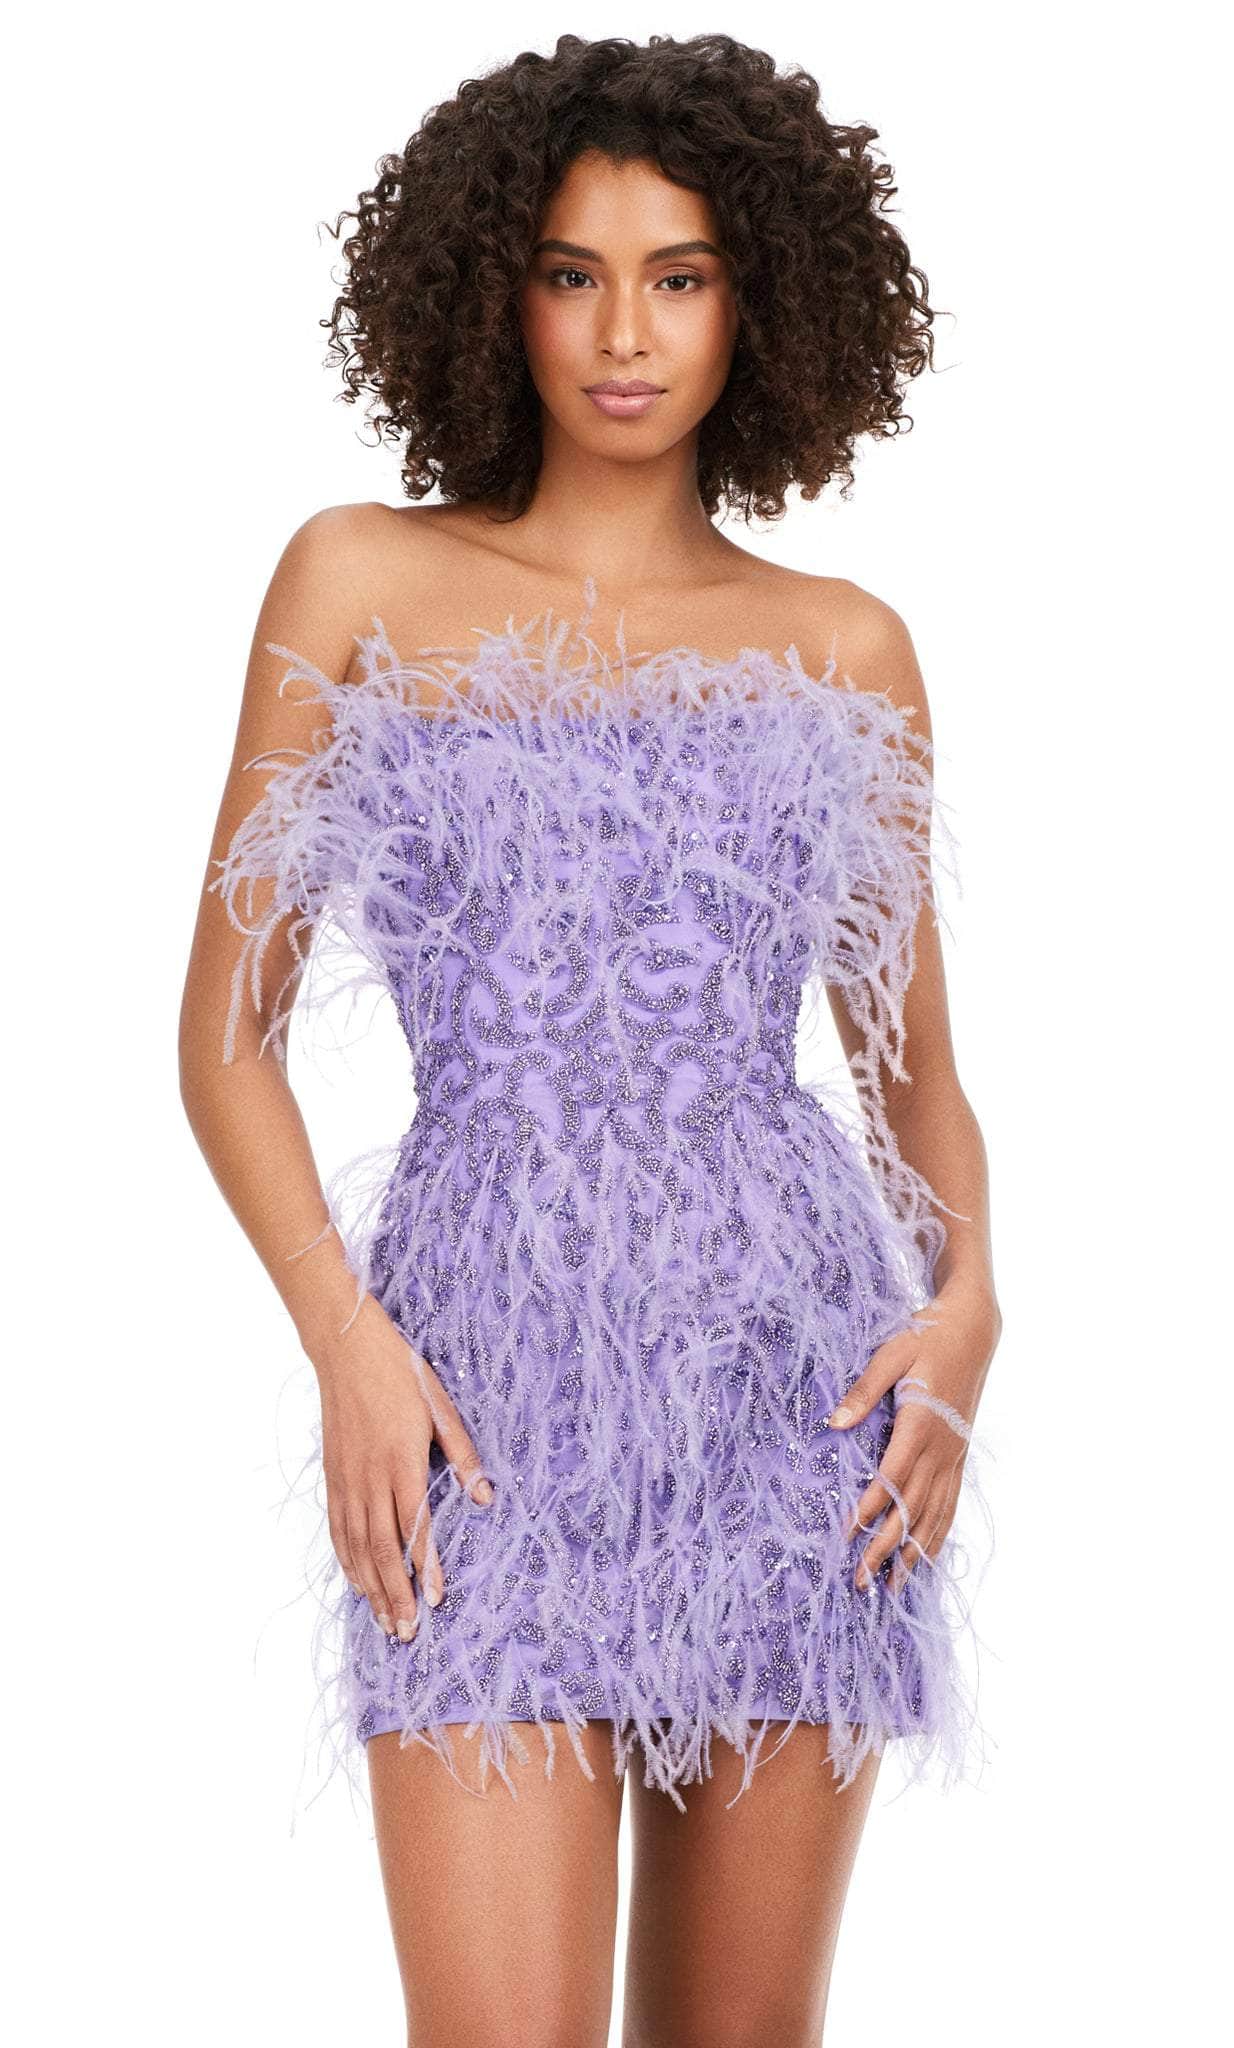 ashley lauren 4615 - feathered dress